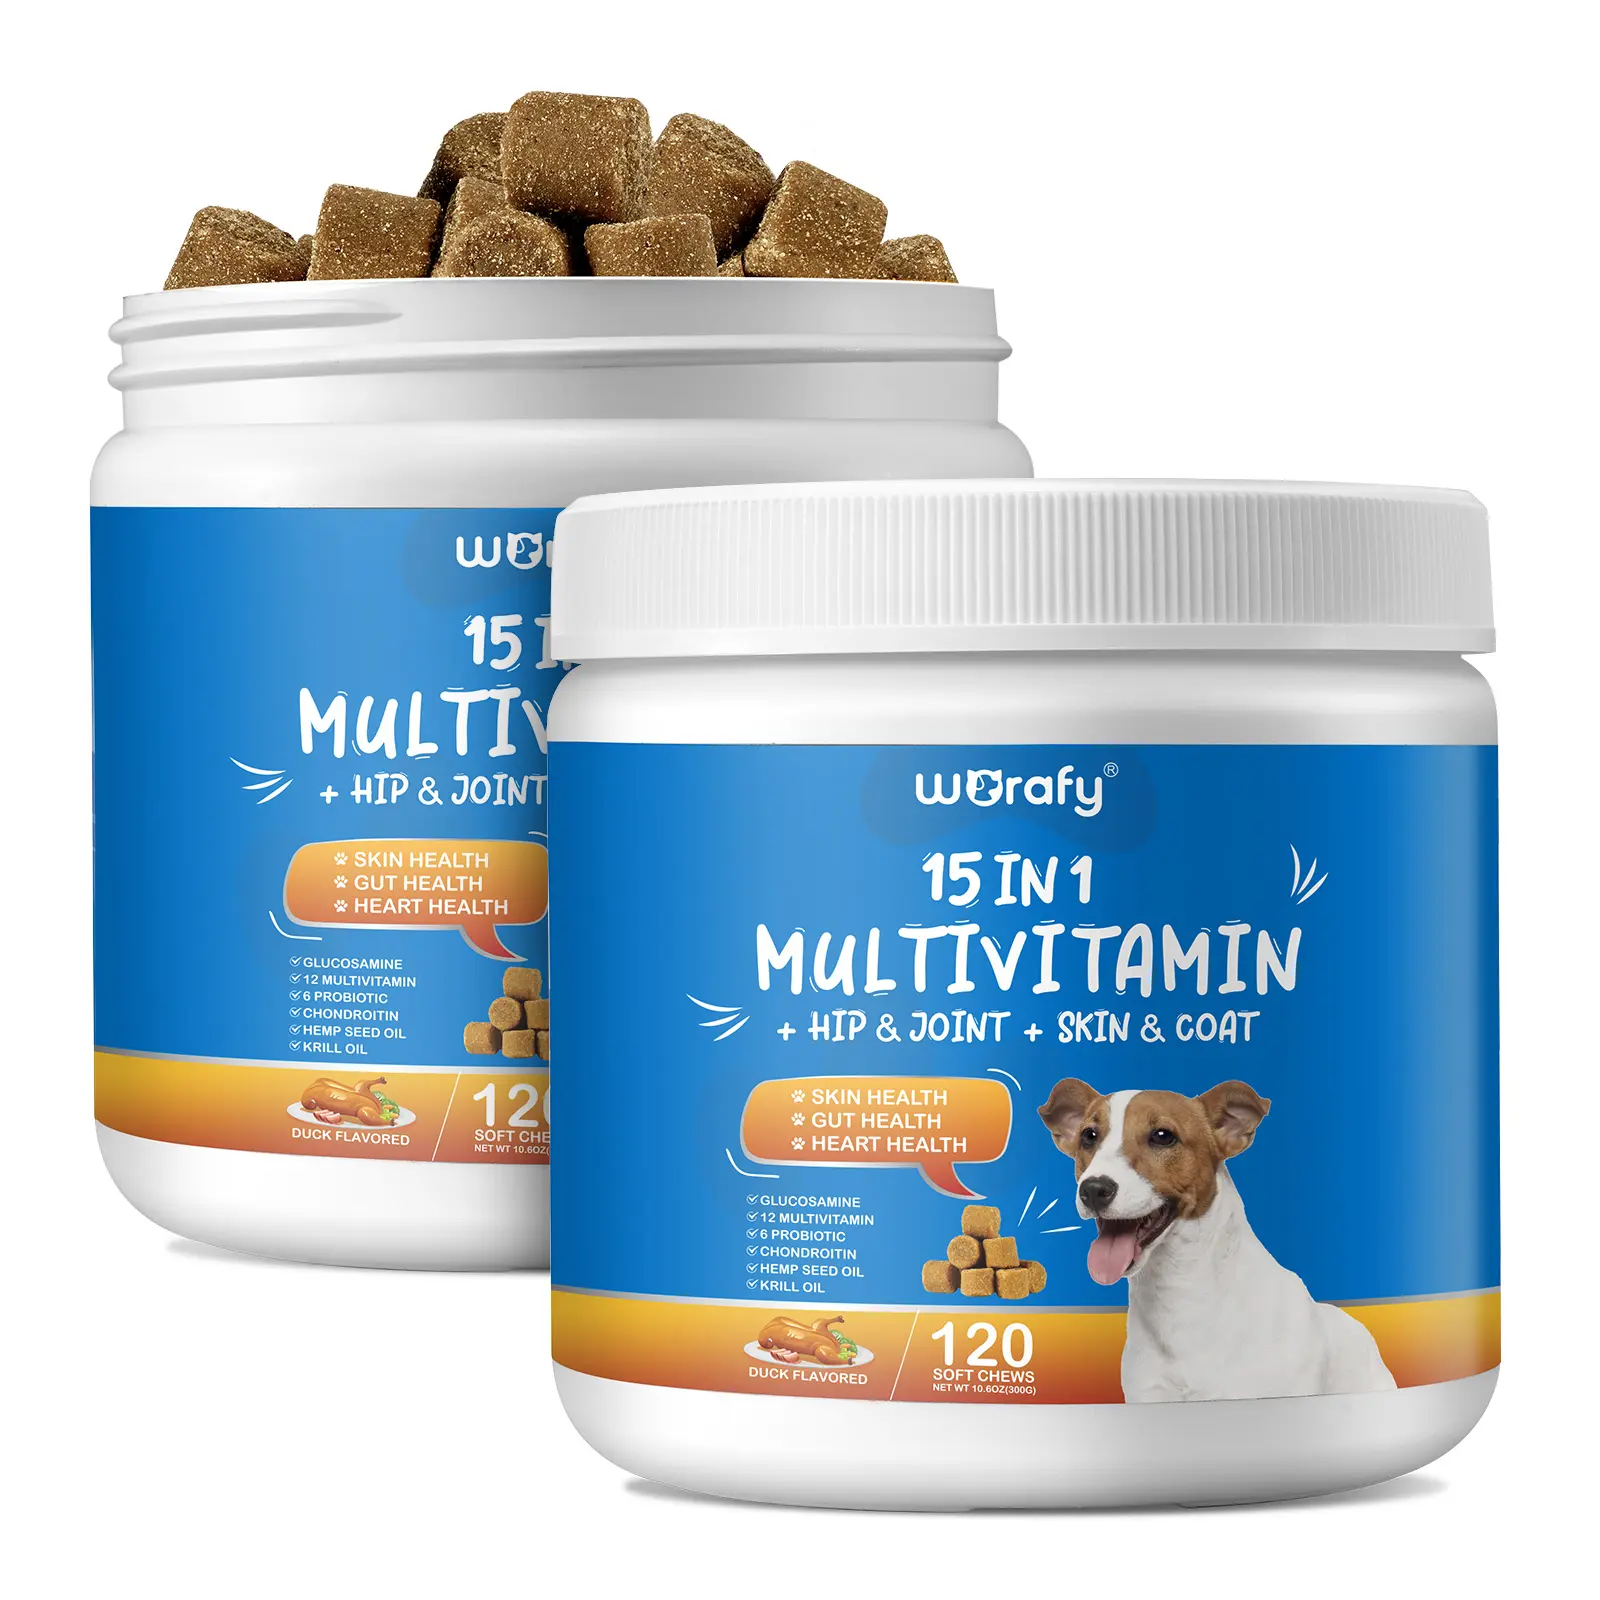 WORAFY Immunity Digestion Joint Heart Health Pet Supplement Soft Chew dog 15 IN 1 Multivitamin Pet Vitamin Supplement